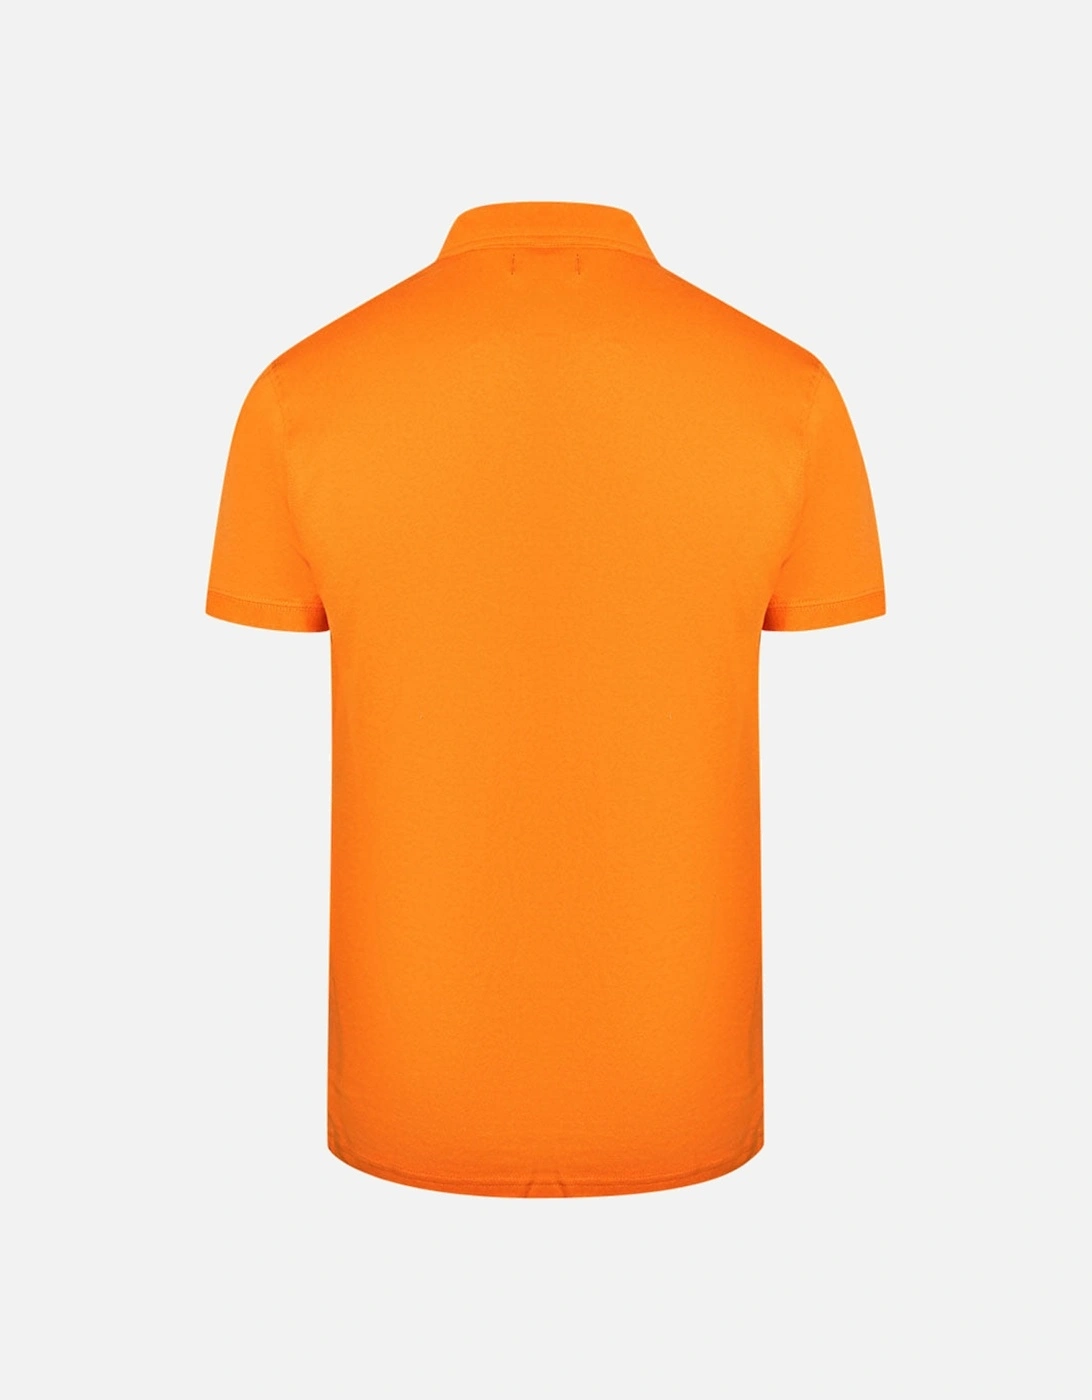 Cavalli Class Brand Logo Orange Polo Shirt